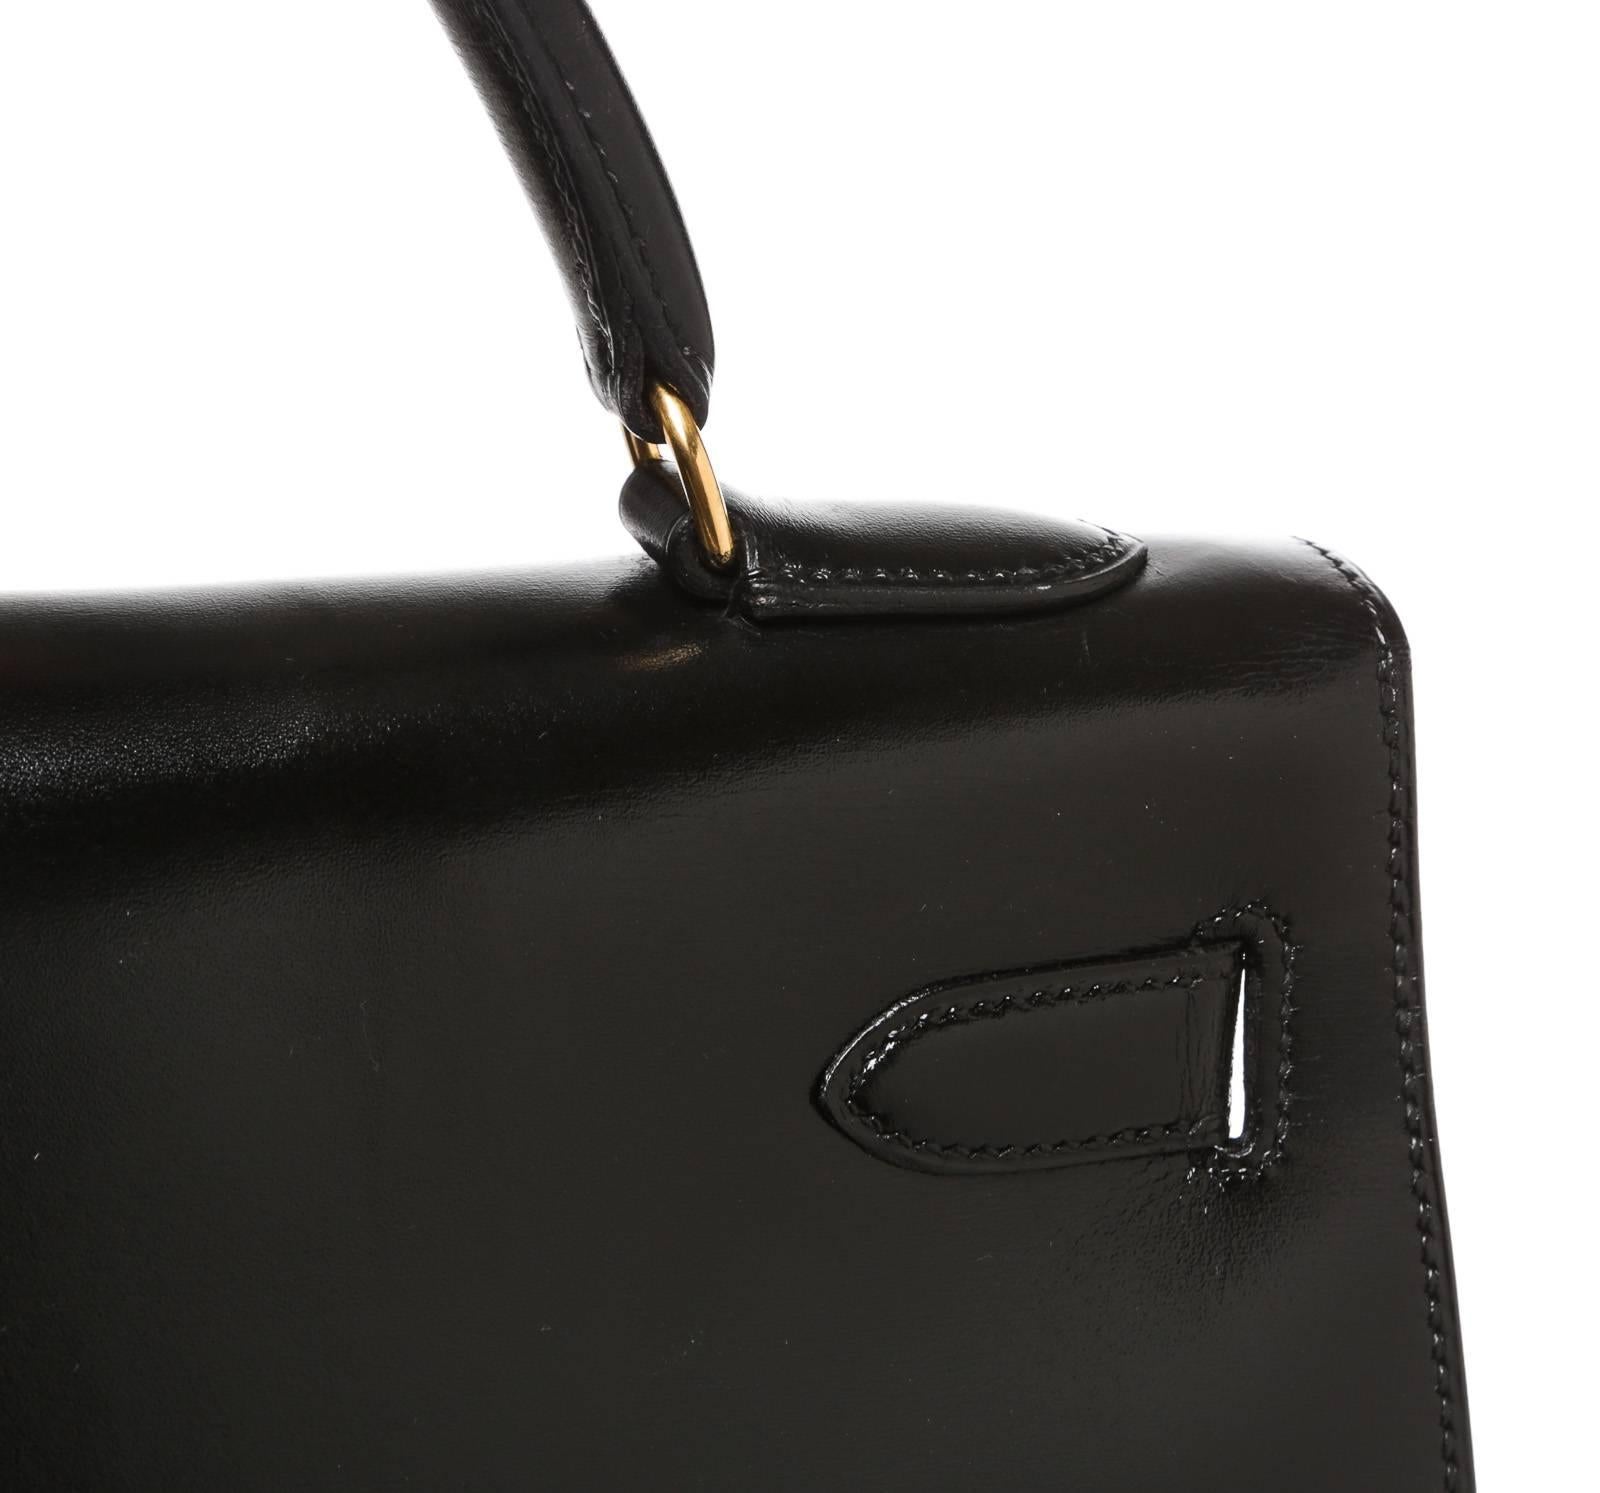 Hermes Black Leather 32cm Kelly Handbag GHW For Sale 4